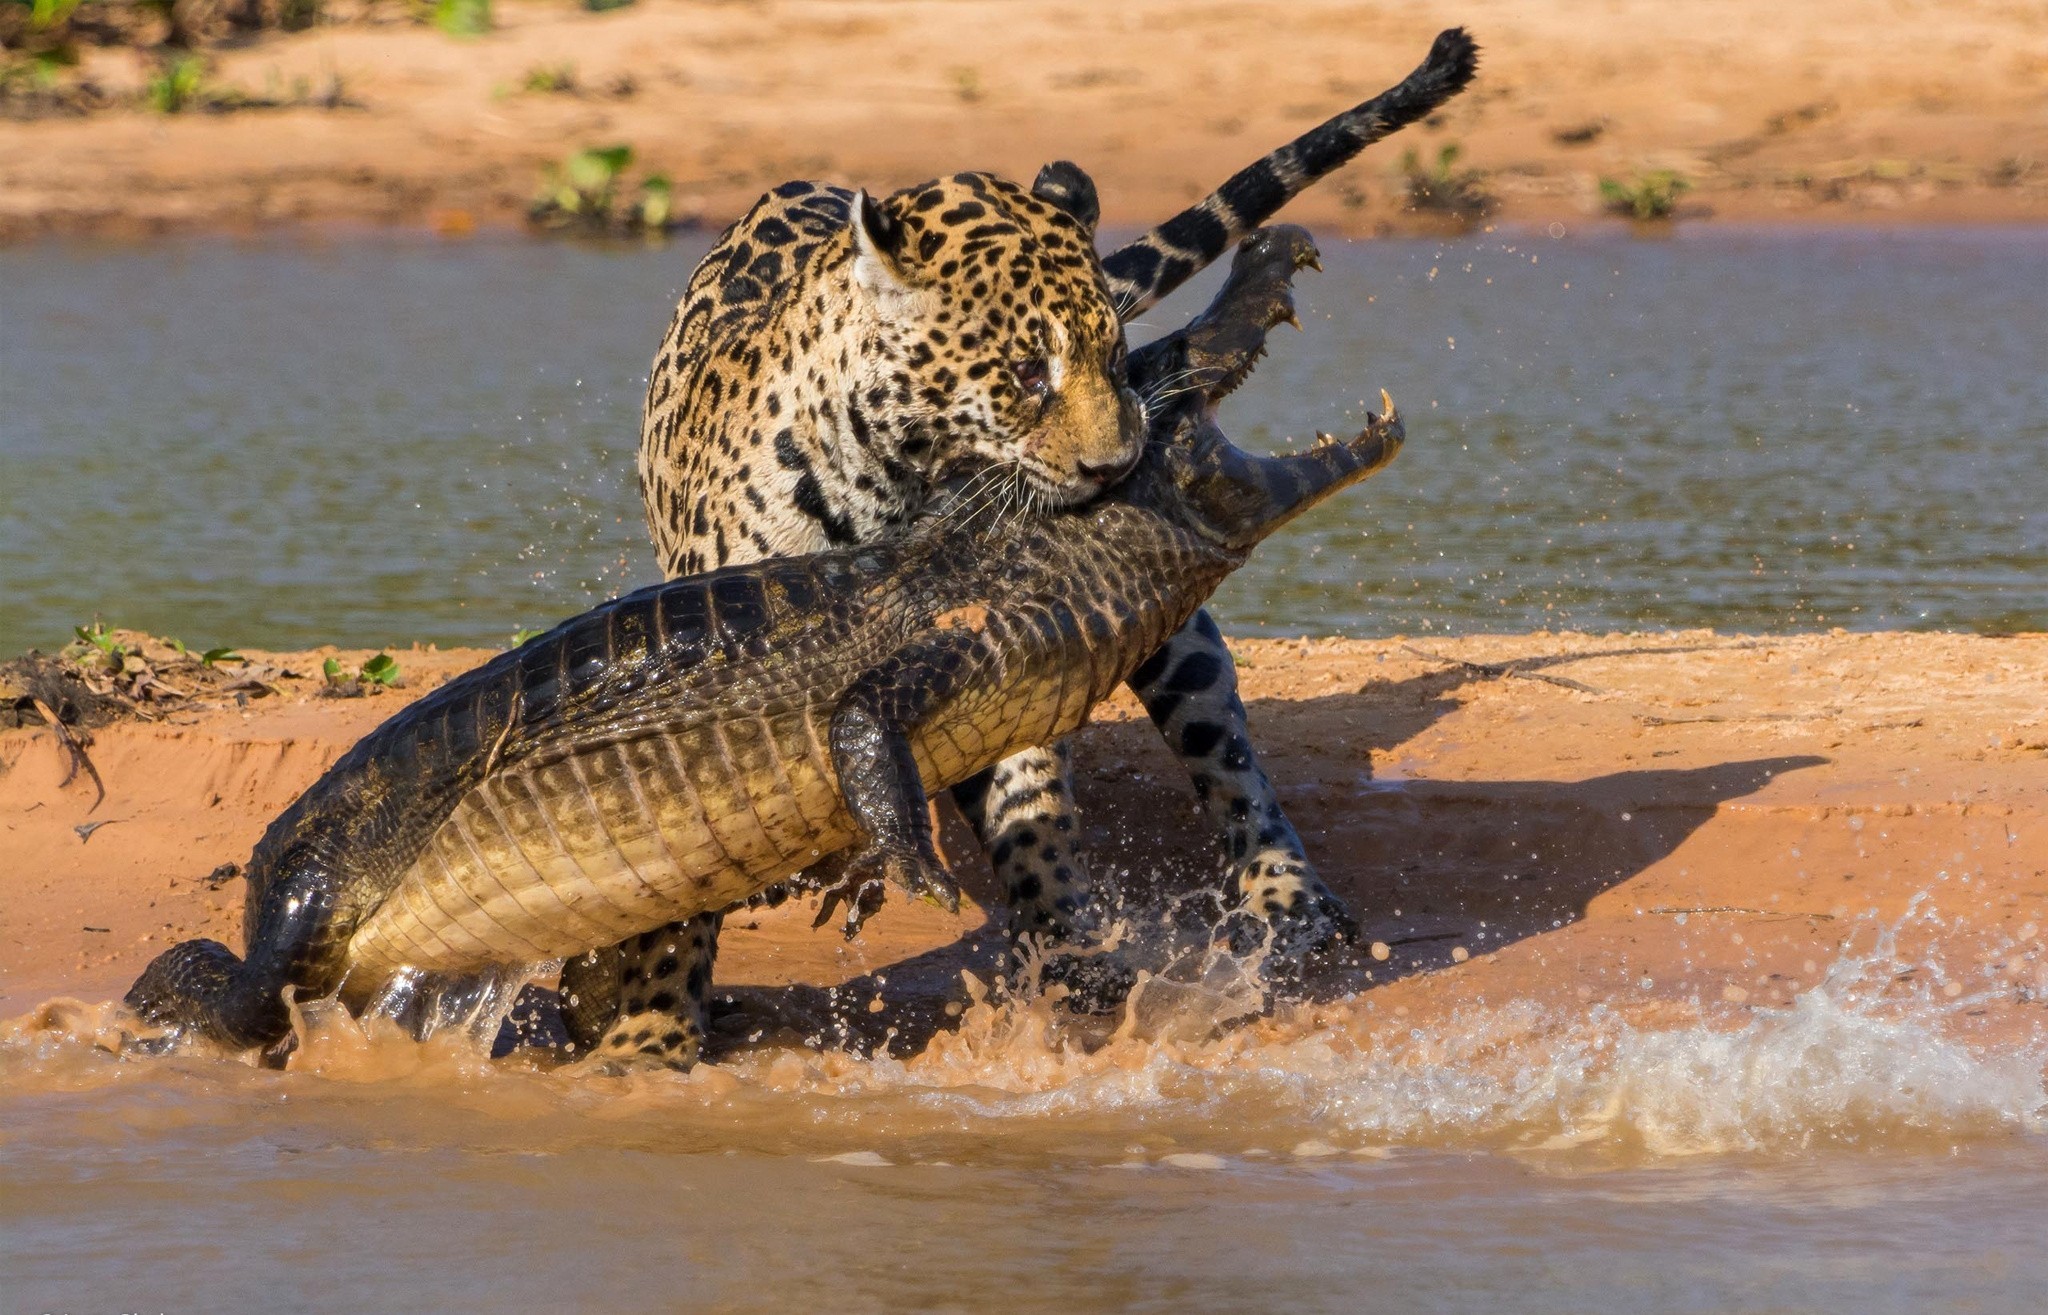 General 2048x1315 animals crocodiles fighting wildlife nature big cats reptiles jaguars